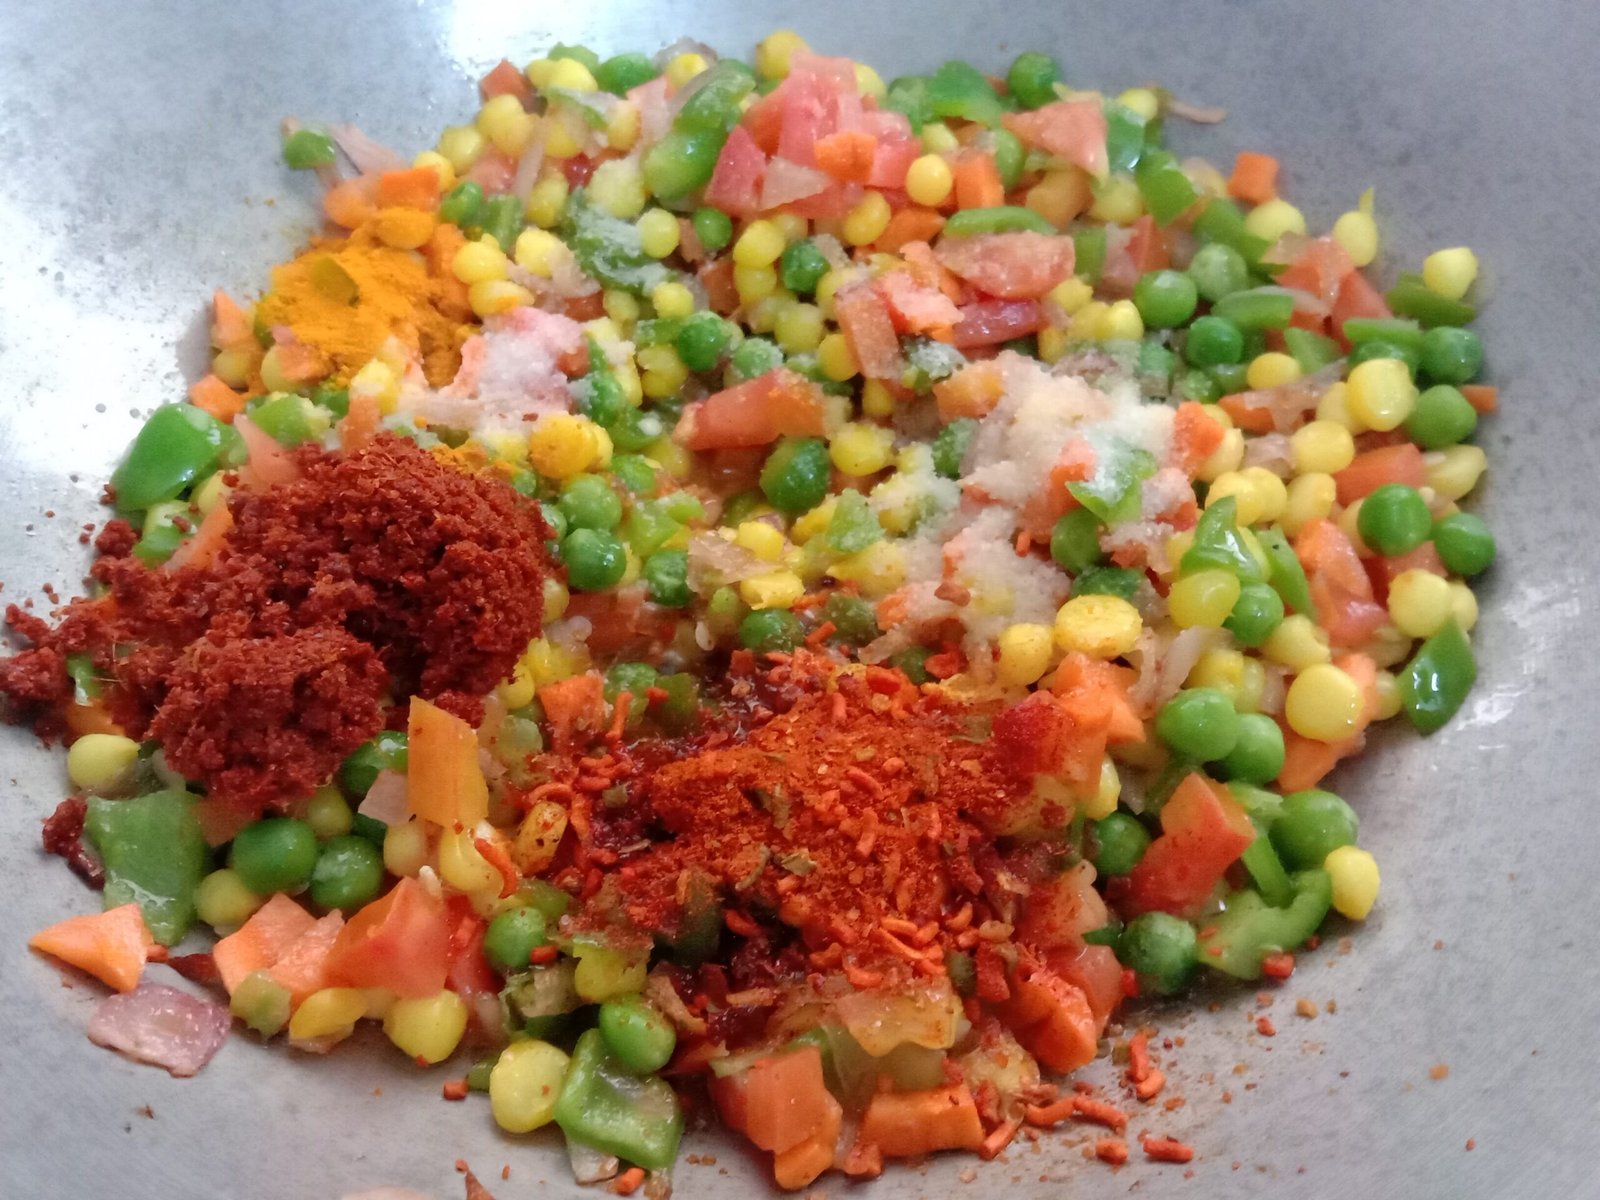 Adding chilli powder and masala in pot, Egg bhurji maggi noodles recipe.